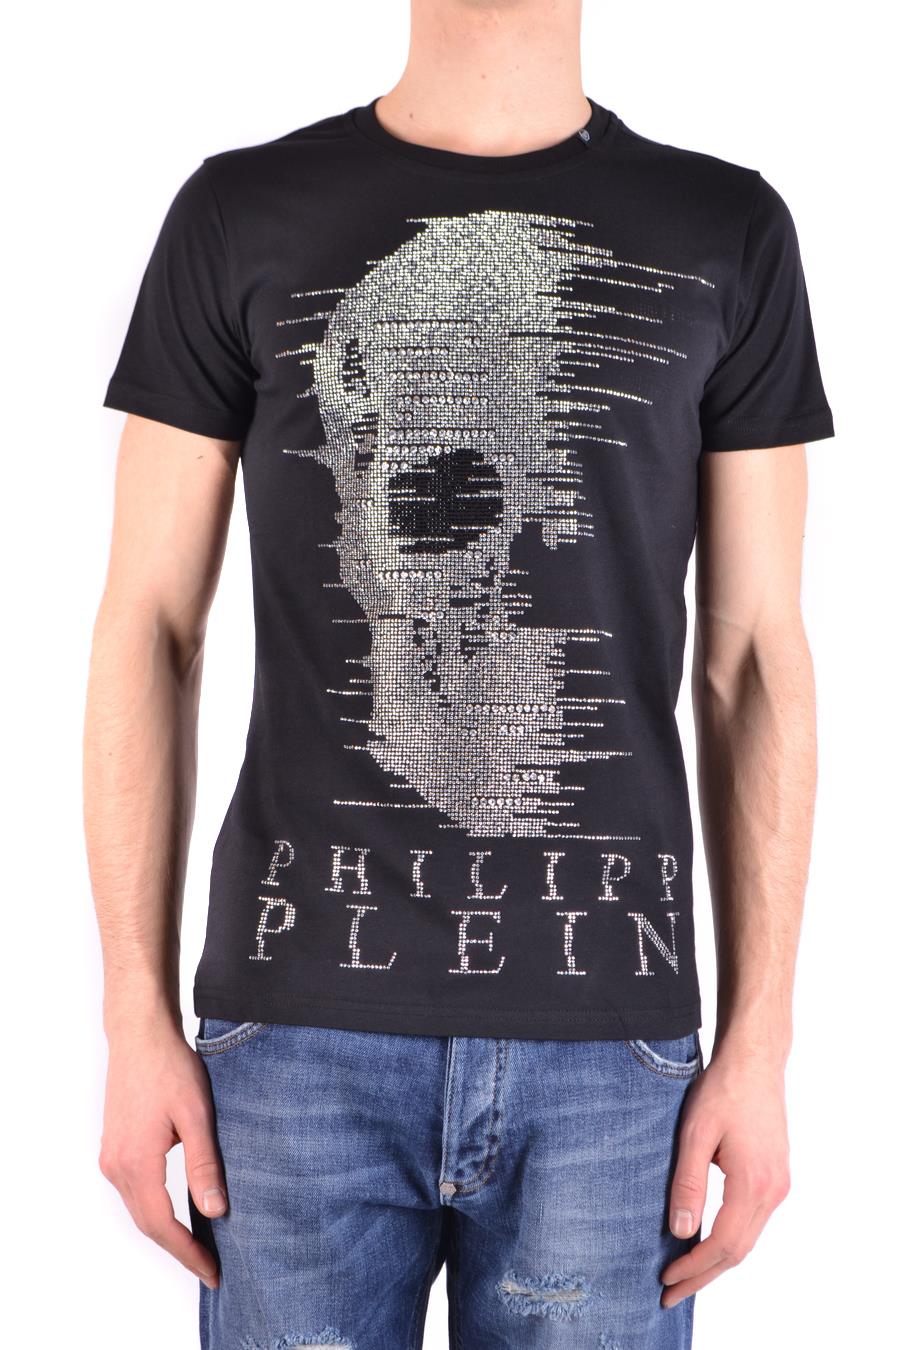 philipp plein t shirt price